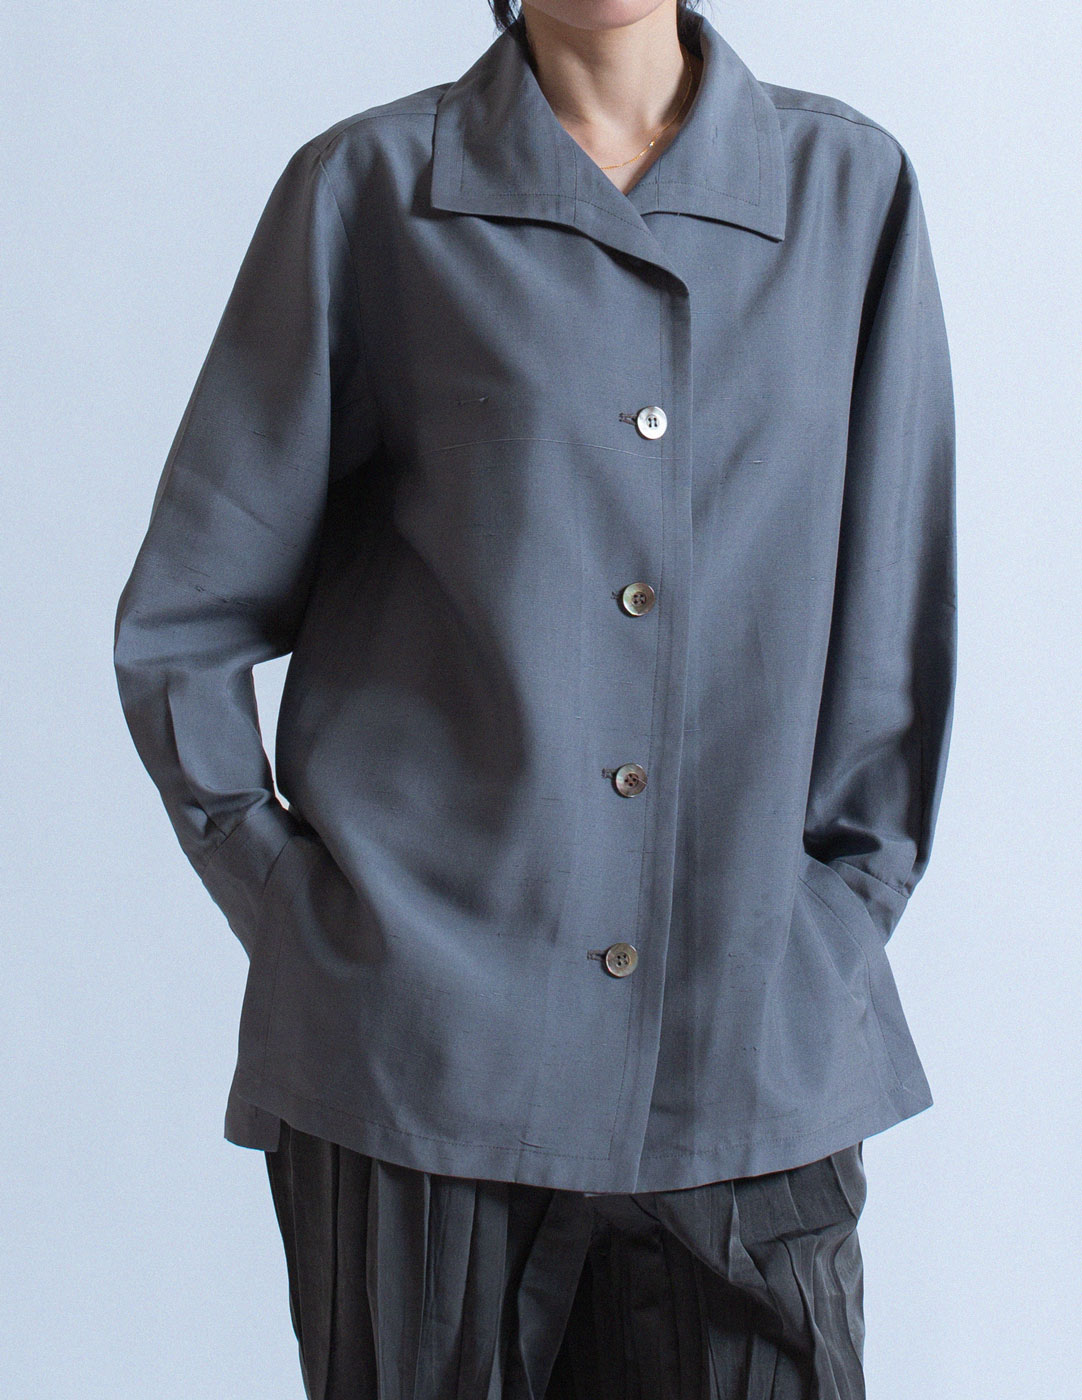 Yves Saint Laurent vintage slate gray silk shirt front detail